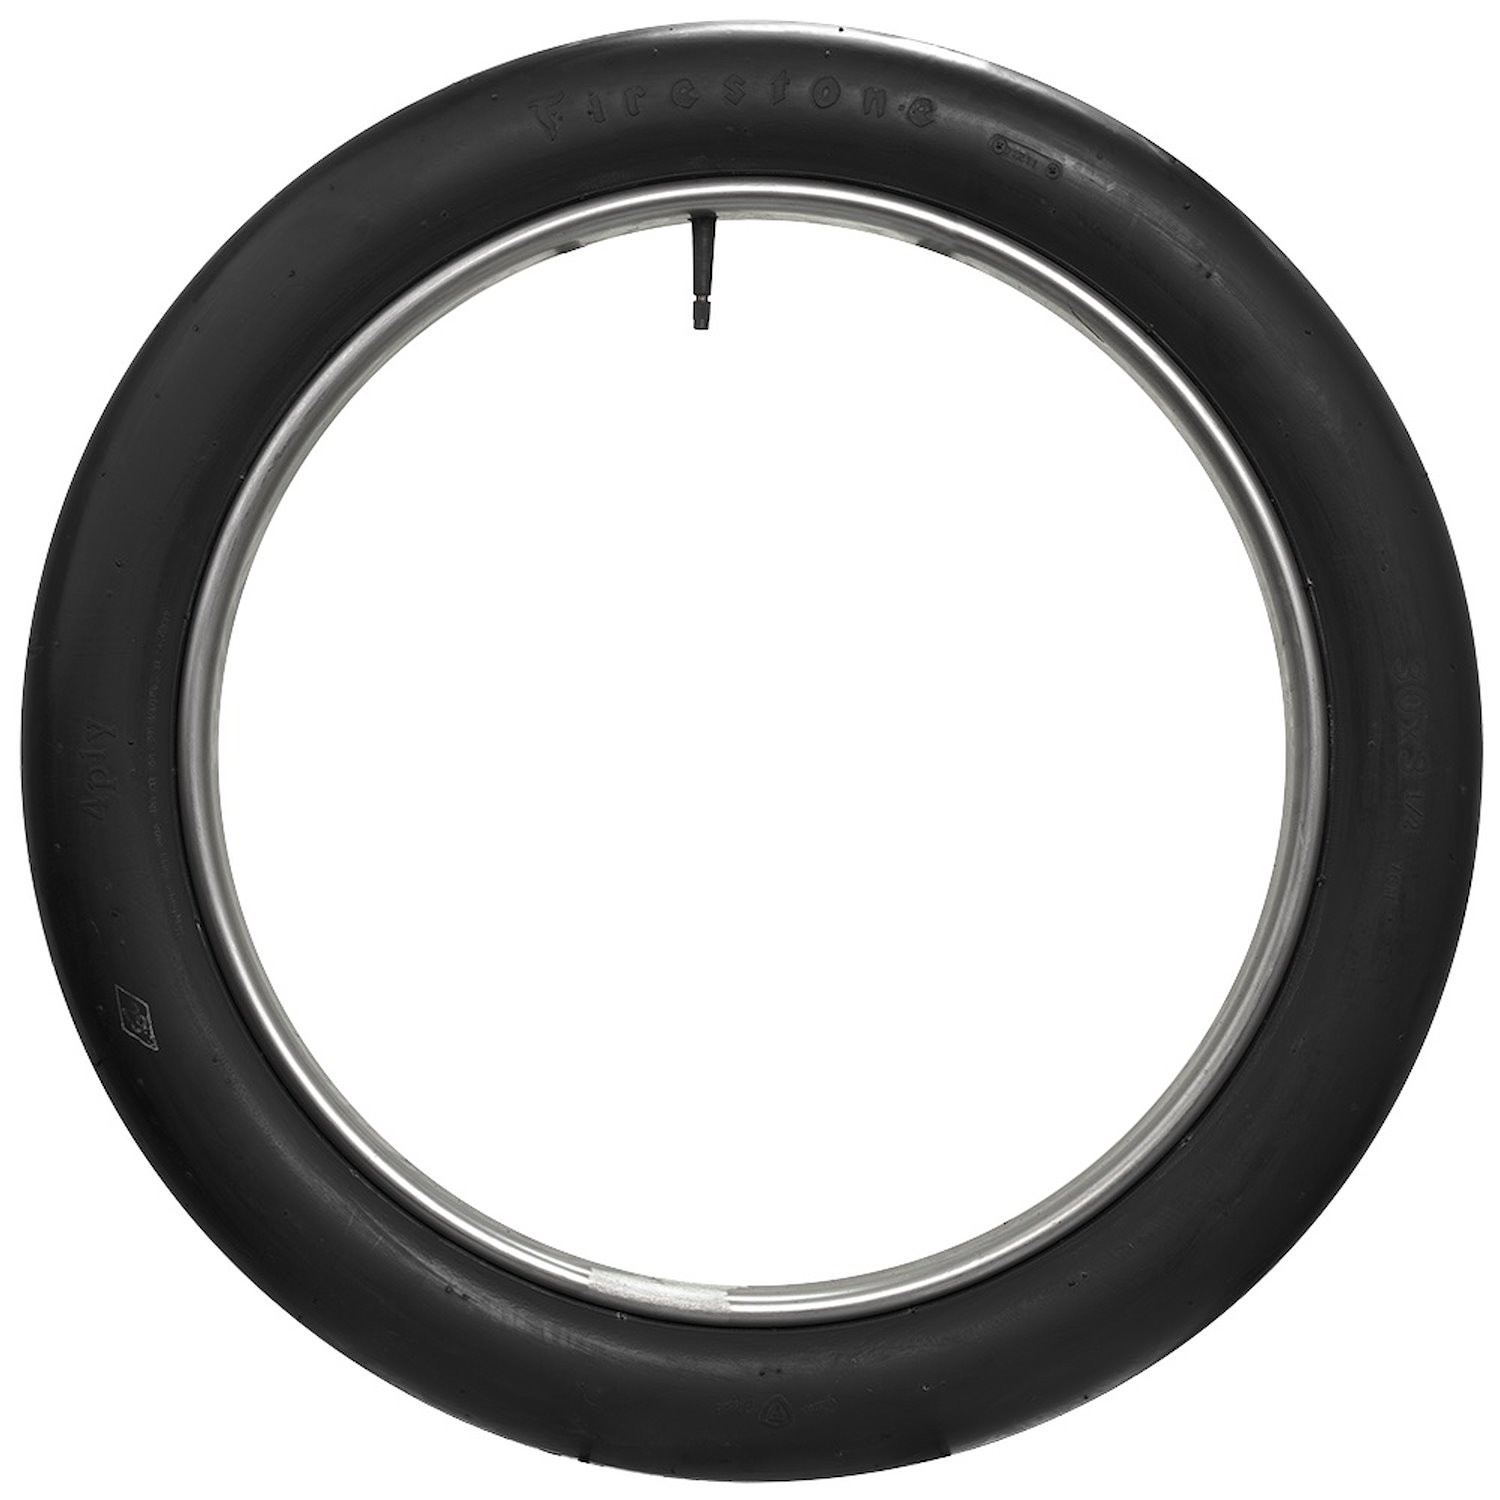 793750 Tire, Firestone Cl-Incher, Smooth, All Black, 30x35